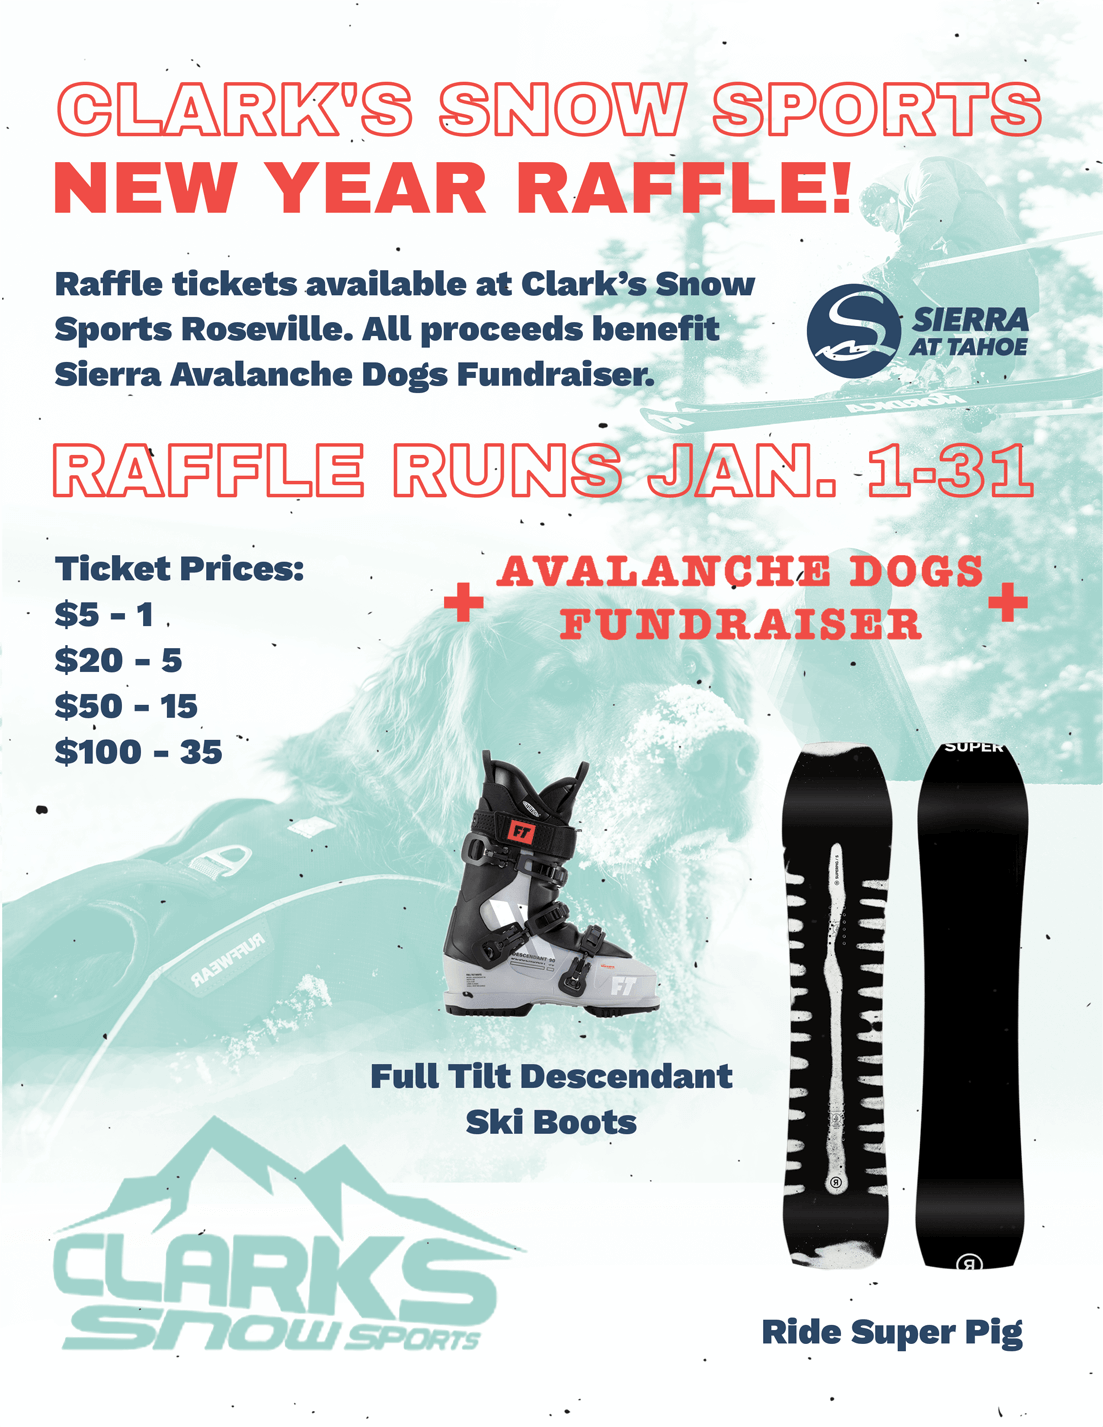 Sierra Avalanche Dogs Fundraiser